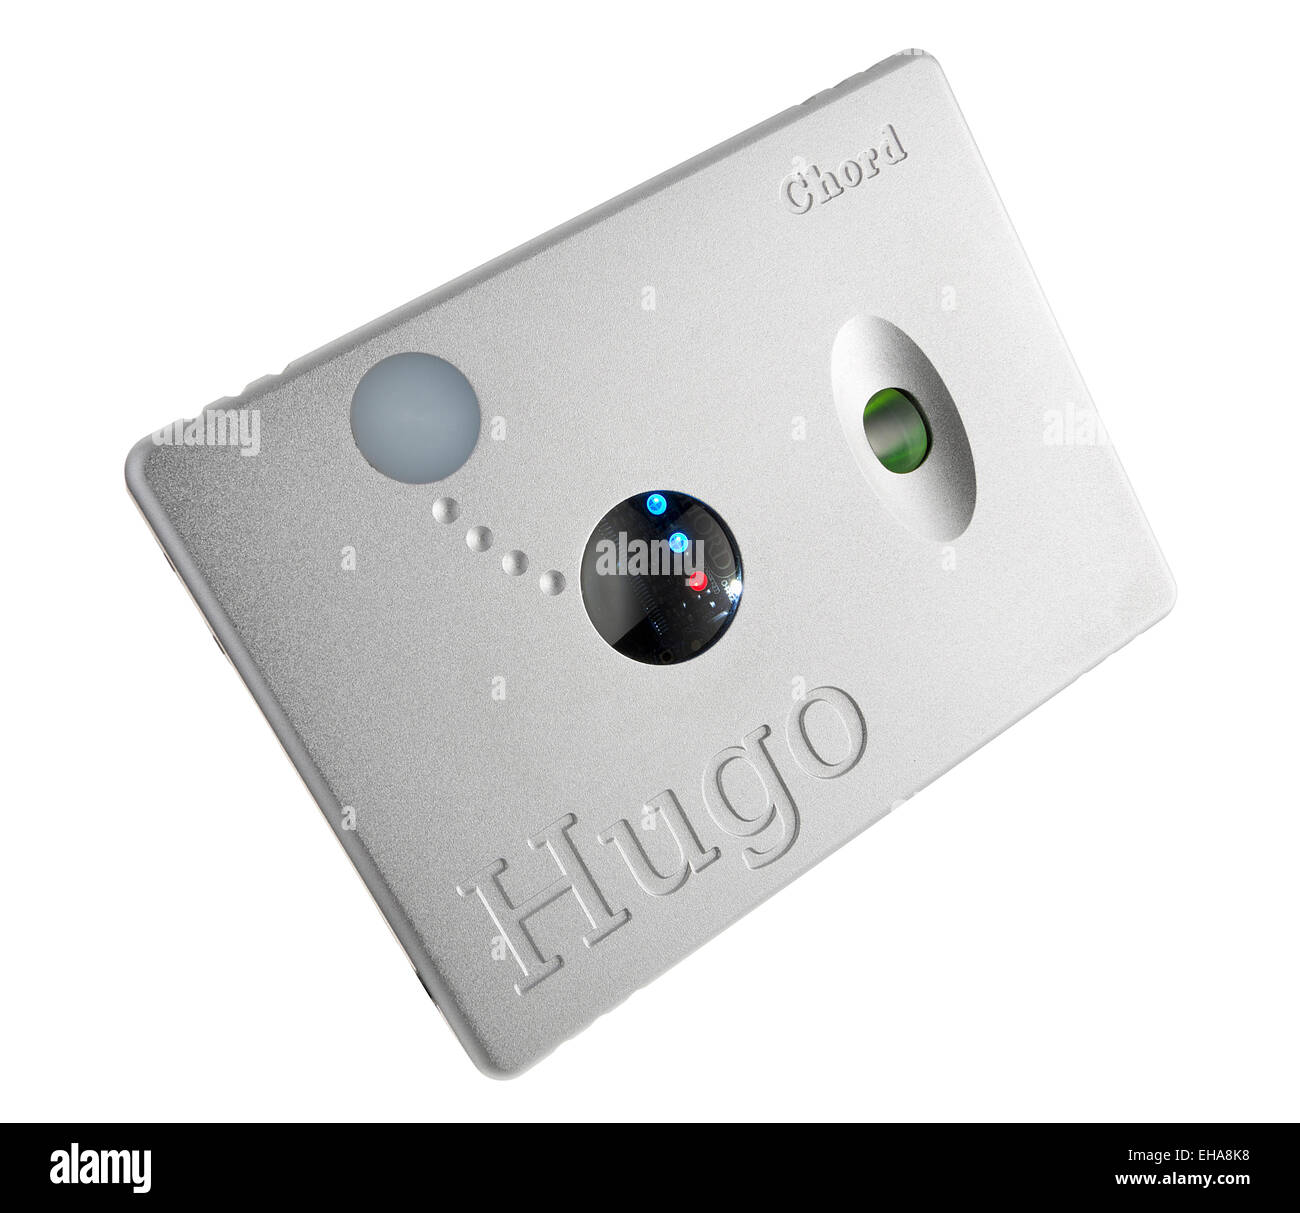 Hugo-Akkord. Mobile-DAC / Kopfhörerverstärker. Chord Electronics digitale audio-Konverter. Stockfoto